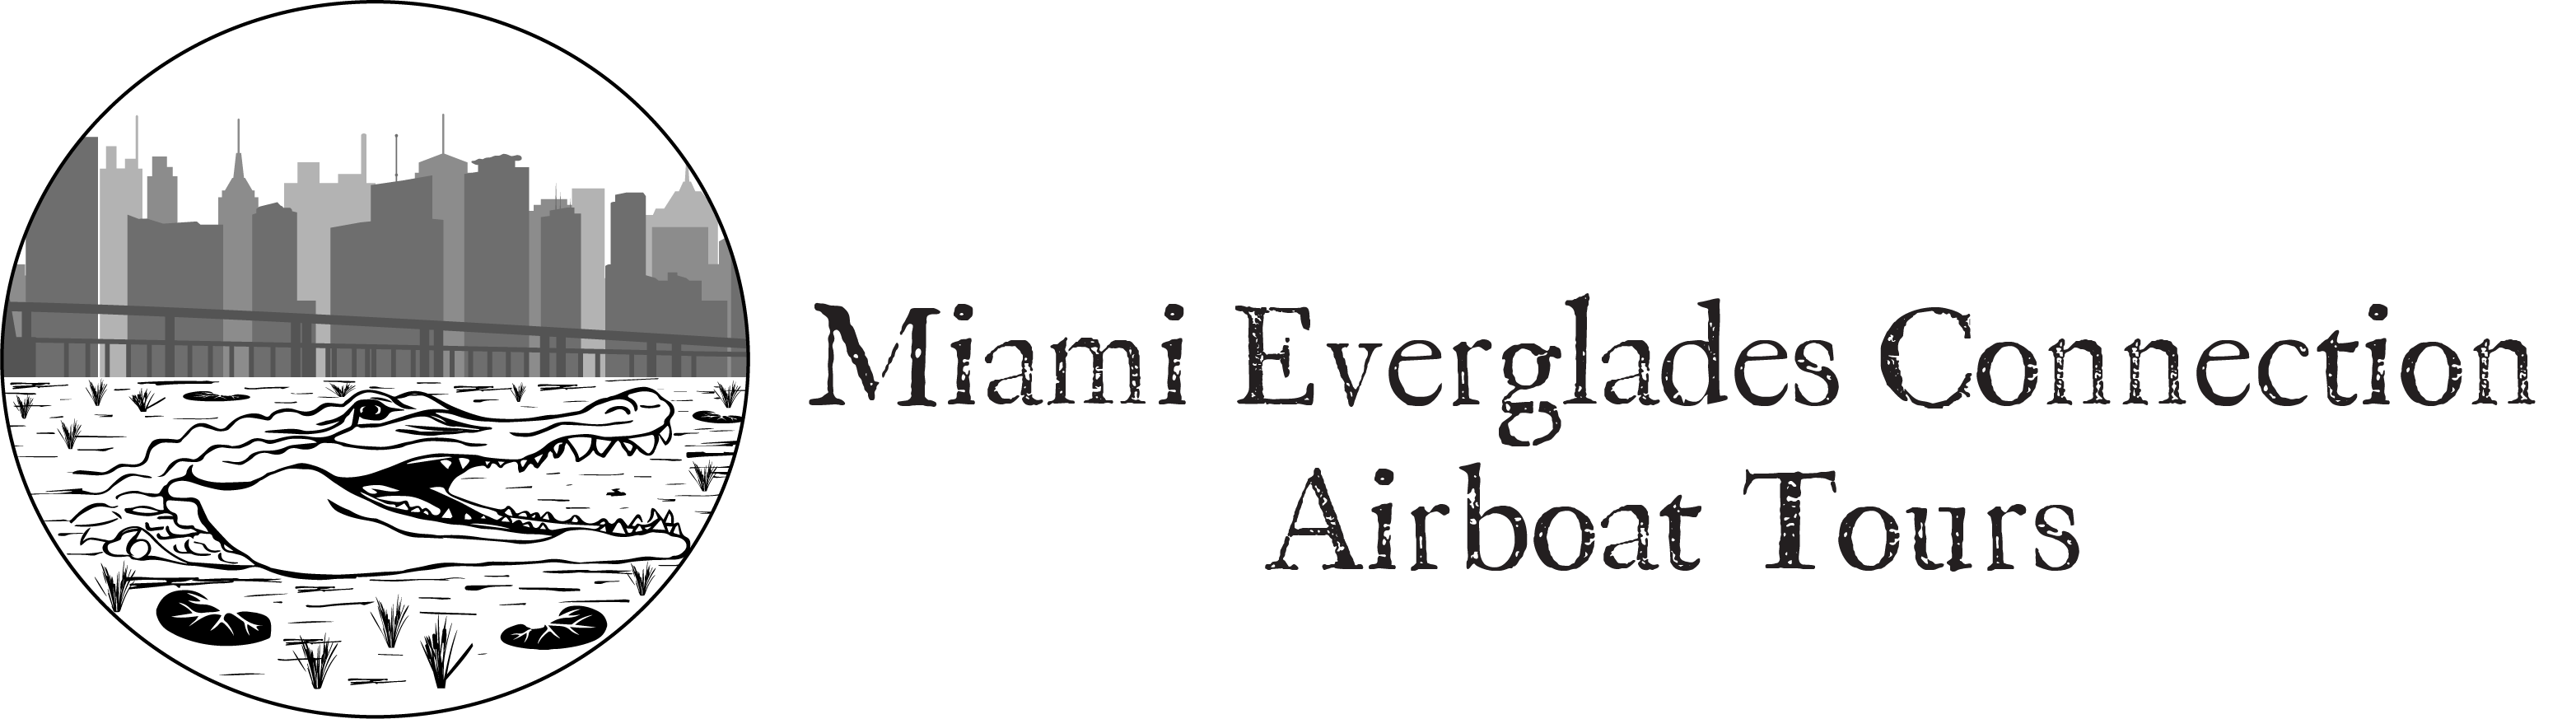 Miami Everglades Connection